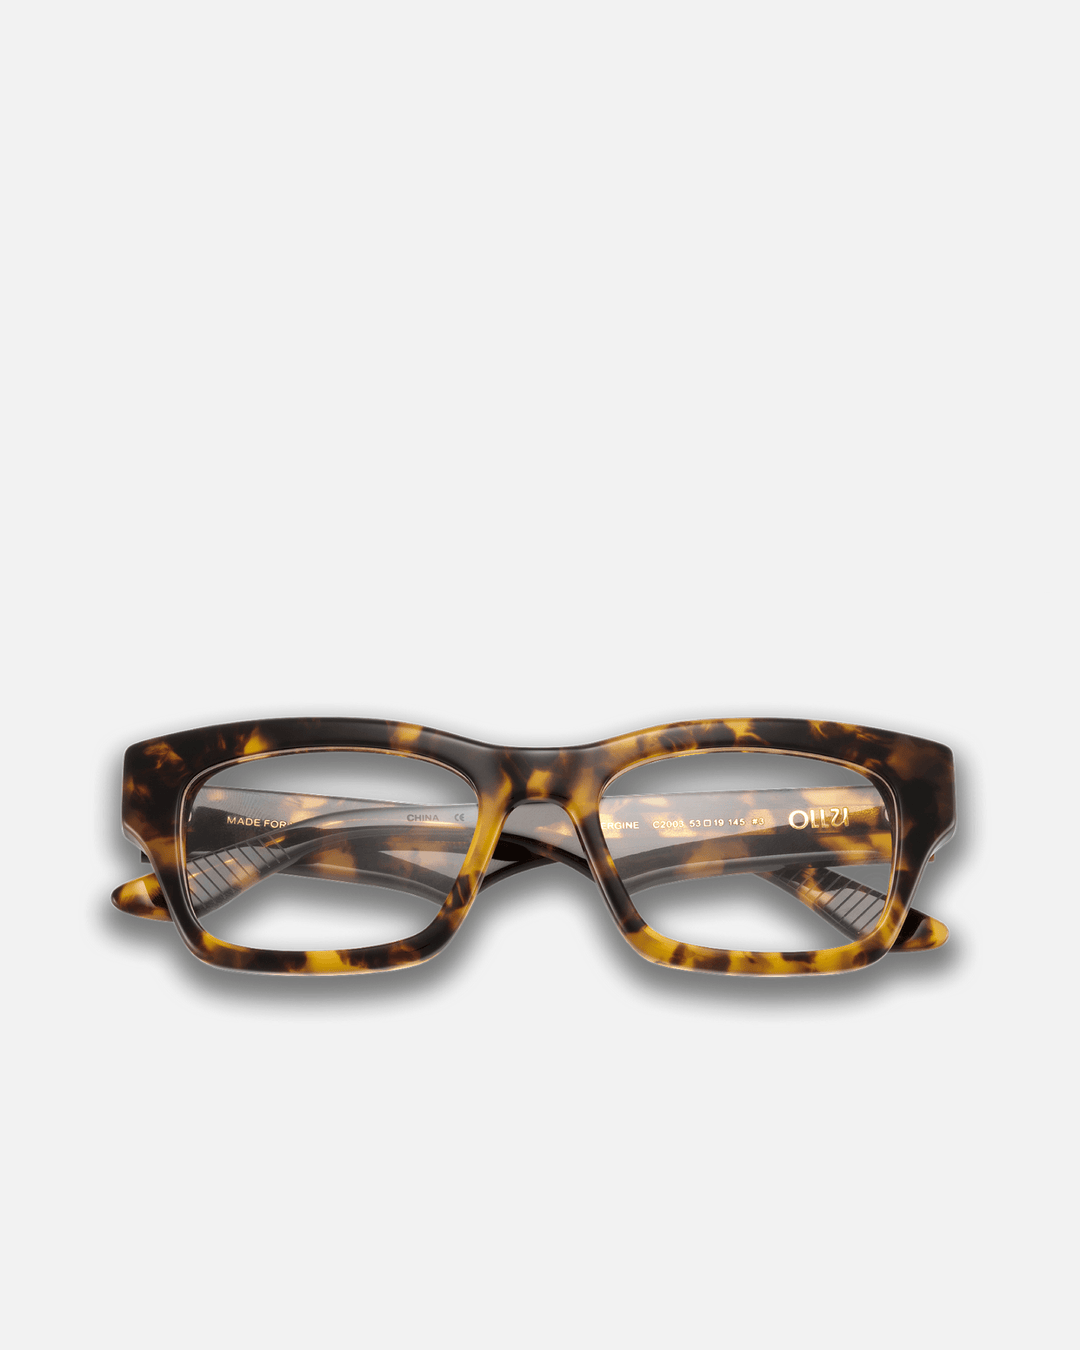 AUBERGINE Bio-Acetate Wayfarer Frame Sunglasses for Men & Women | Honey Speckle | Sunnies Collection | OLLU